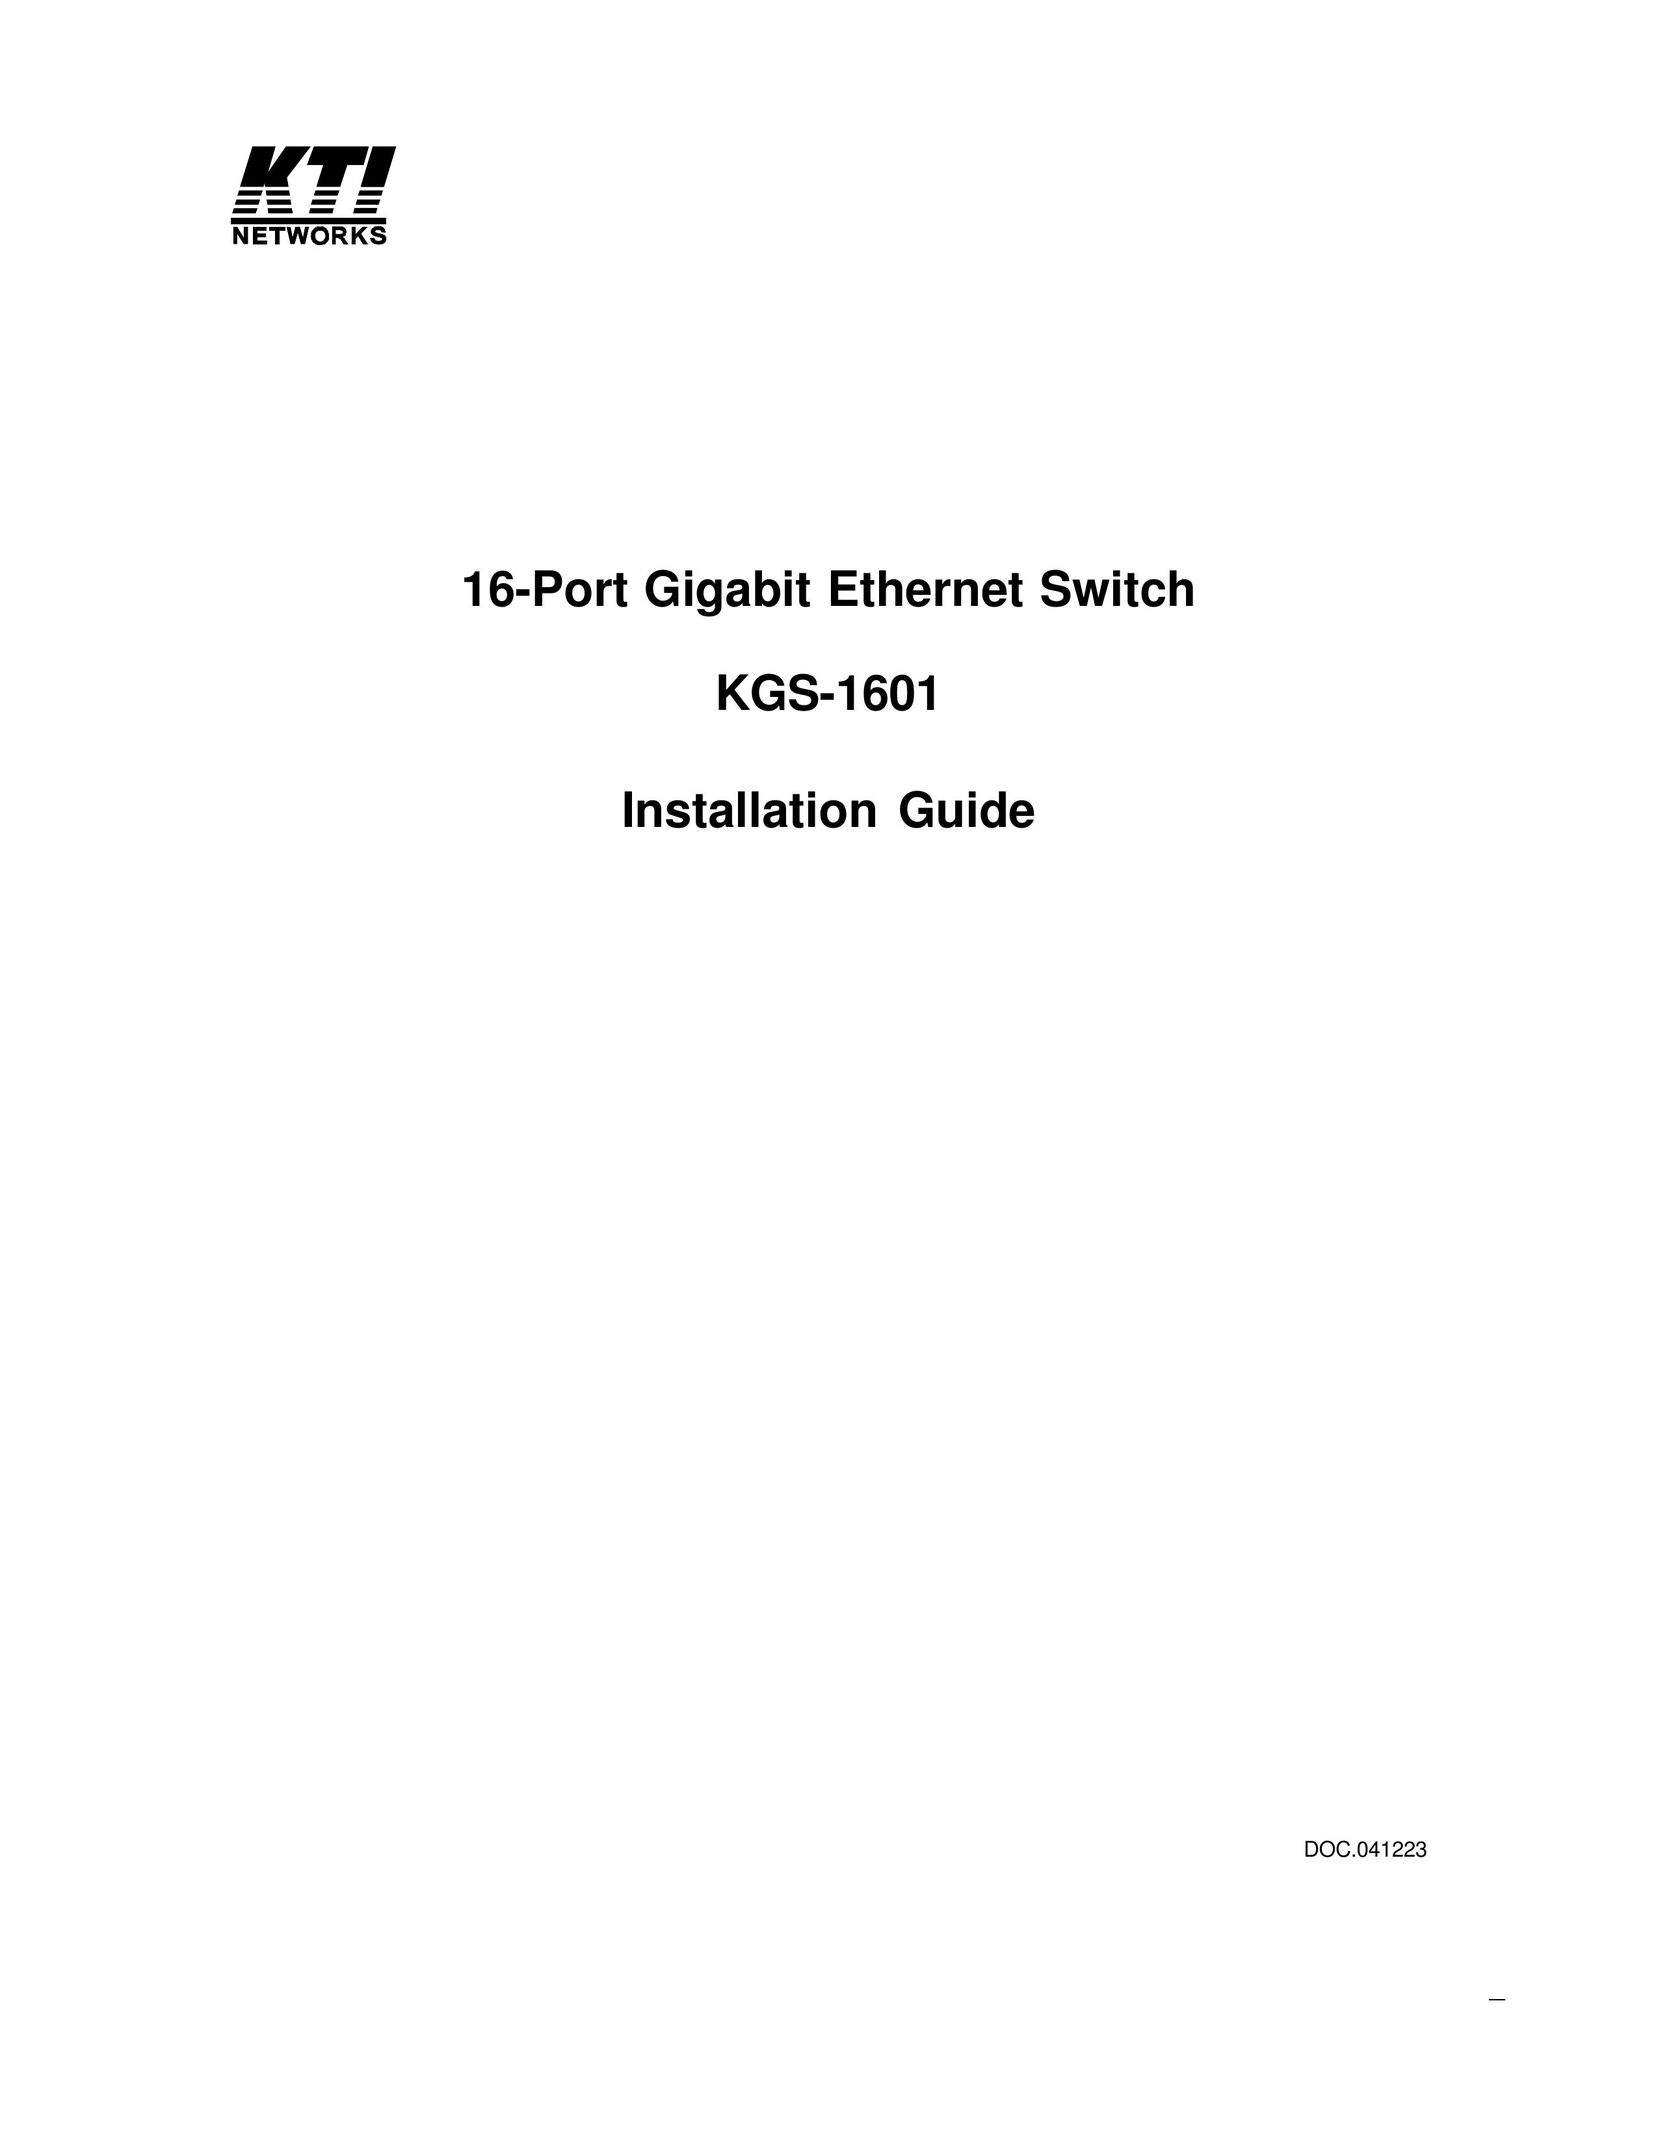 KTI Networks kgs-1601 Switch User Manual